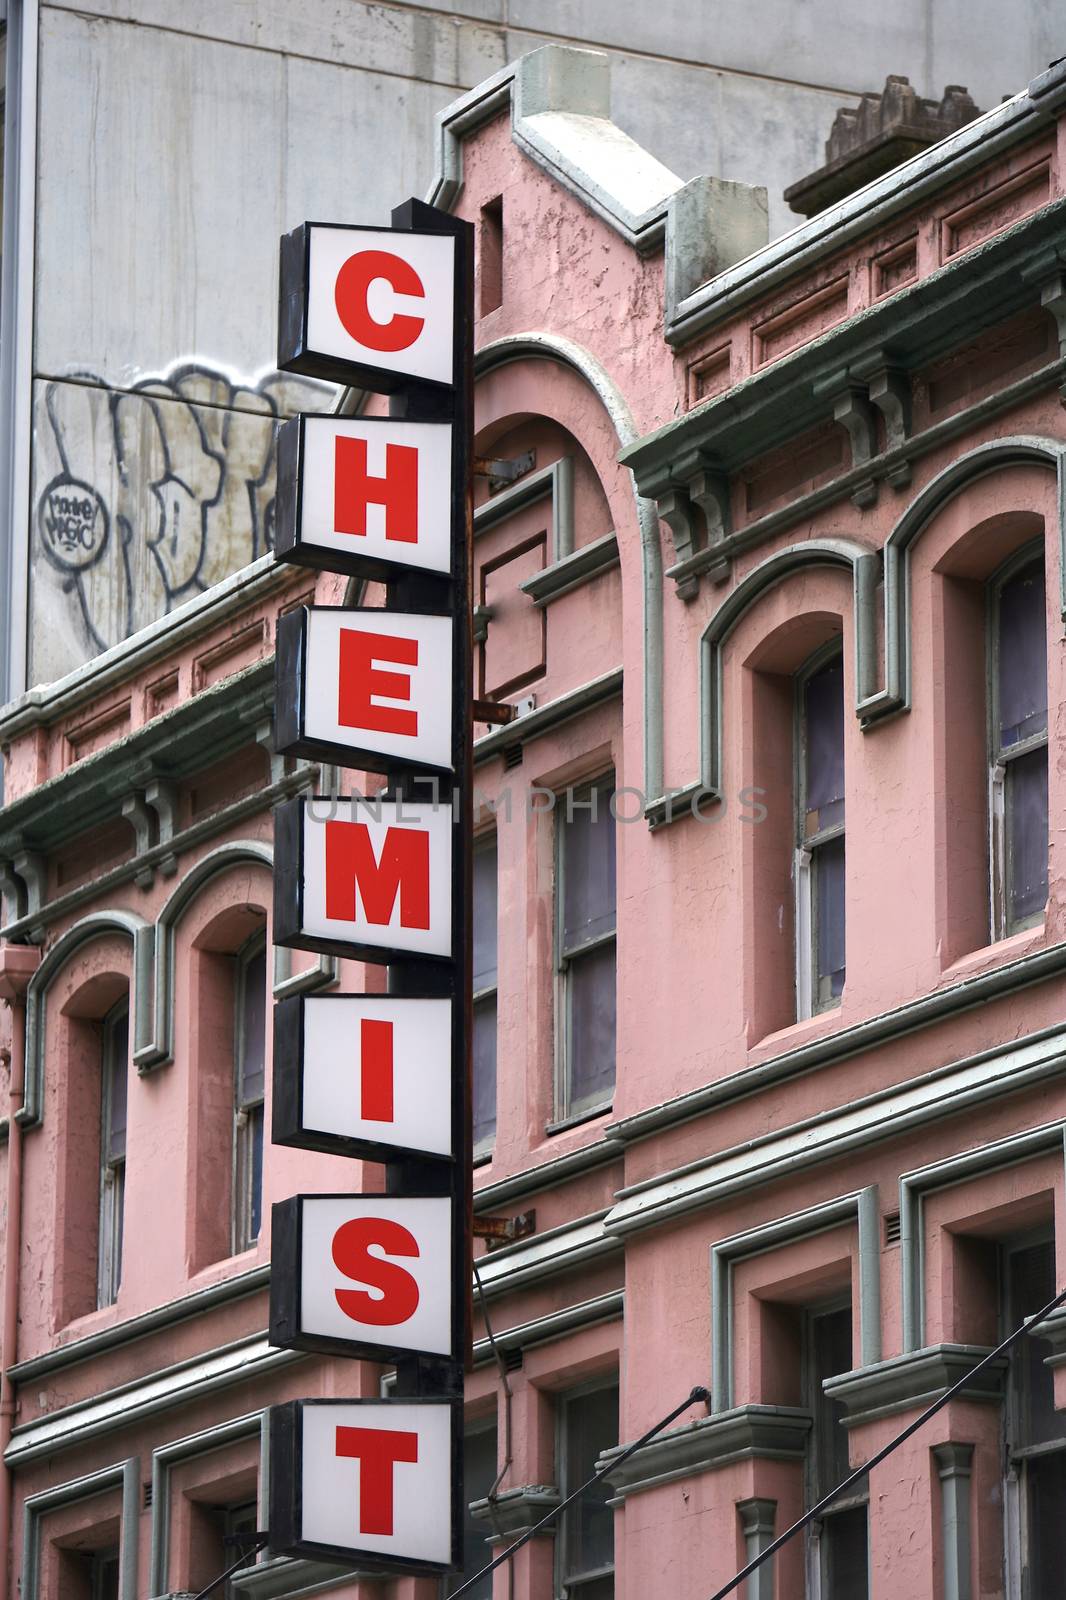 Chemist, Pharmacy sign